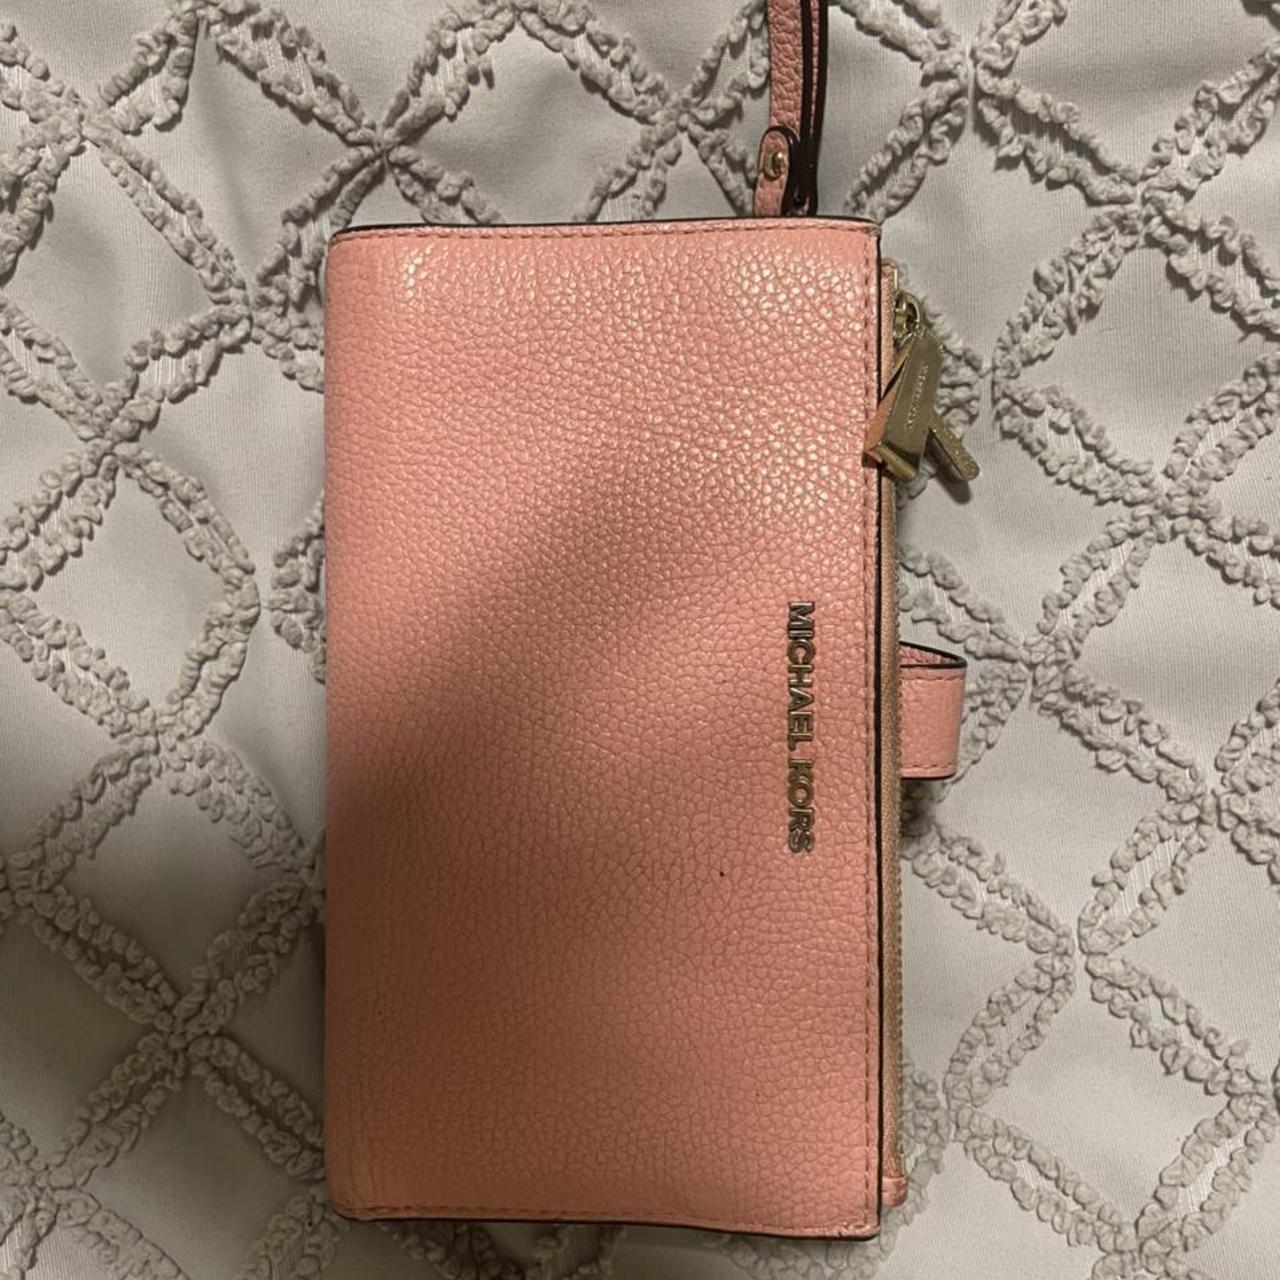 Michael Kors Jet Set Large Phone Wristlet Wallet Brown Mk Powder Blush Pink   Walmartcom